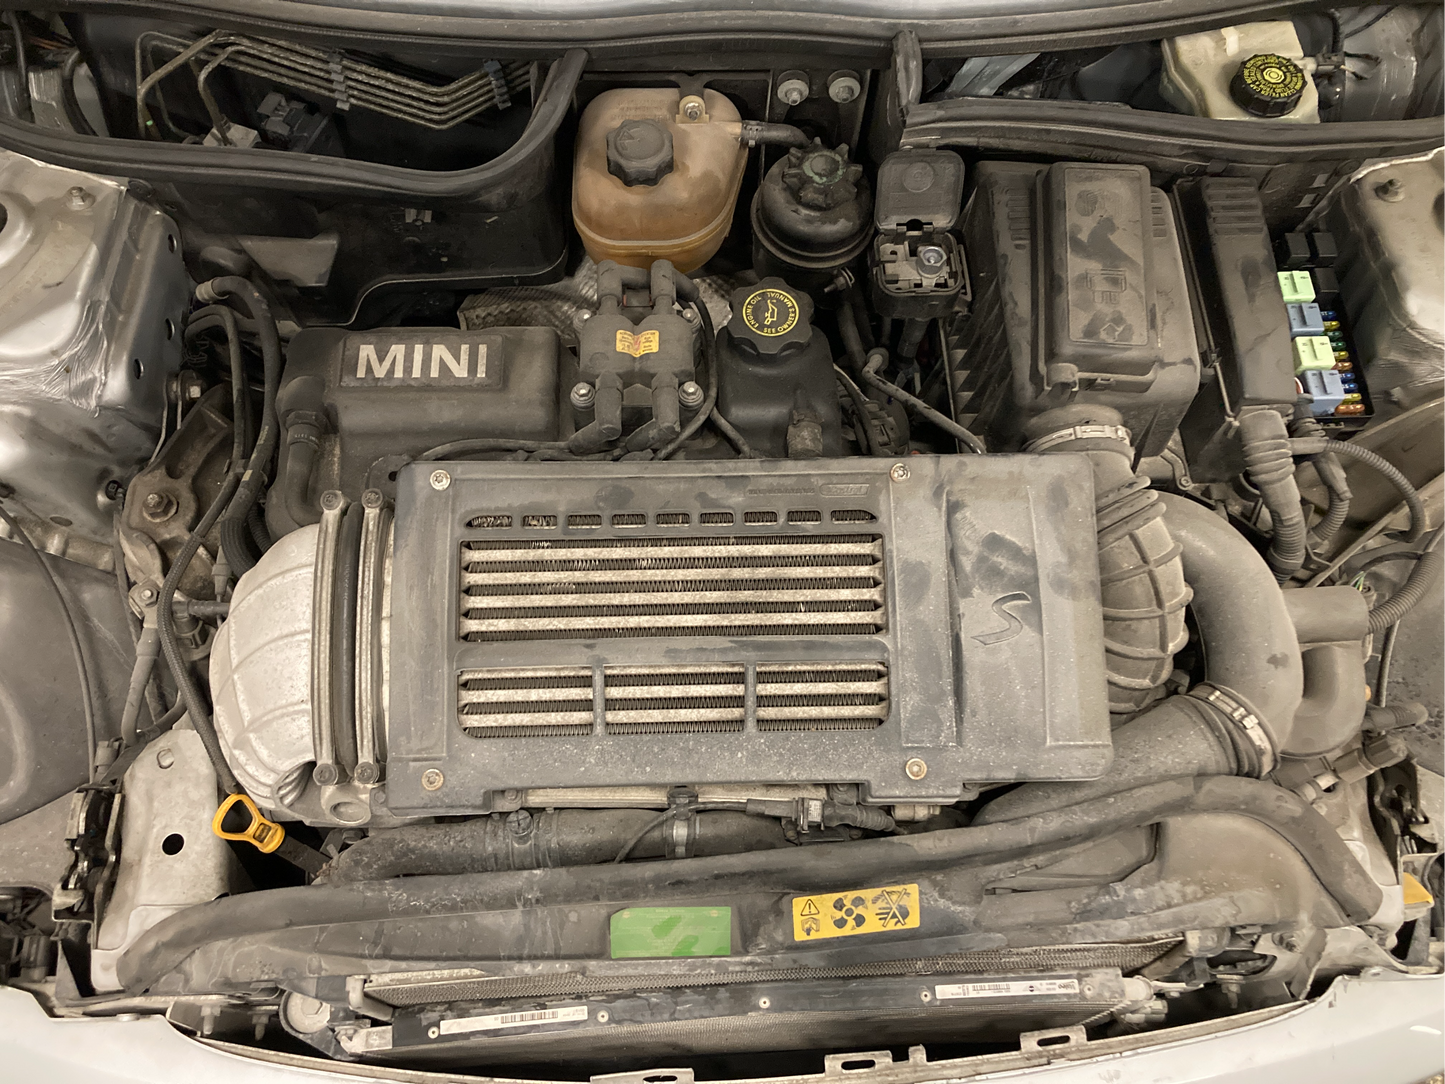 2006 MINI Cooper S, New Parts Car (May 2023) Stk #375